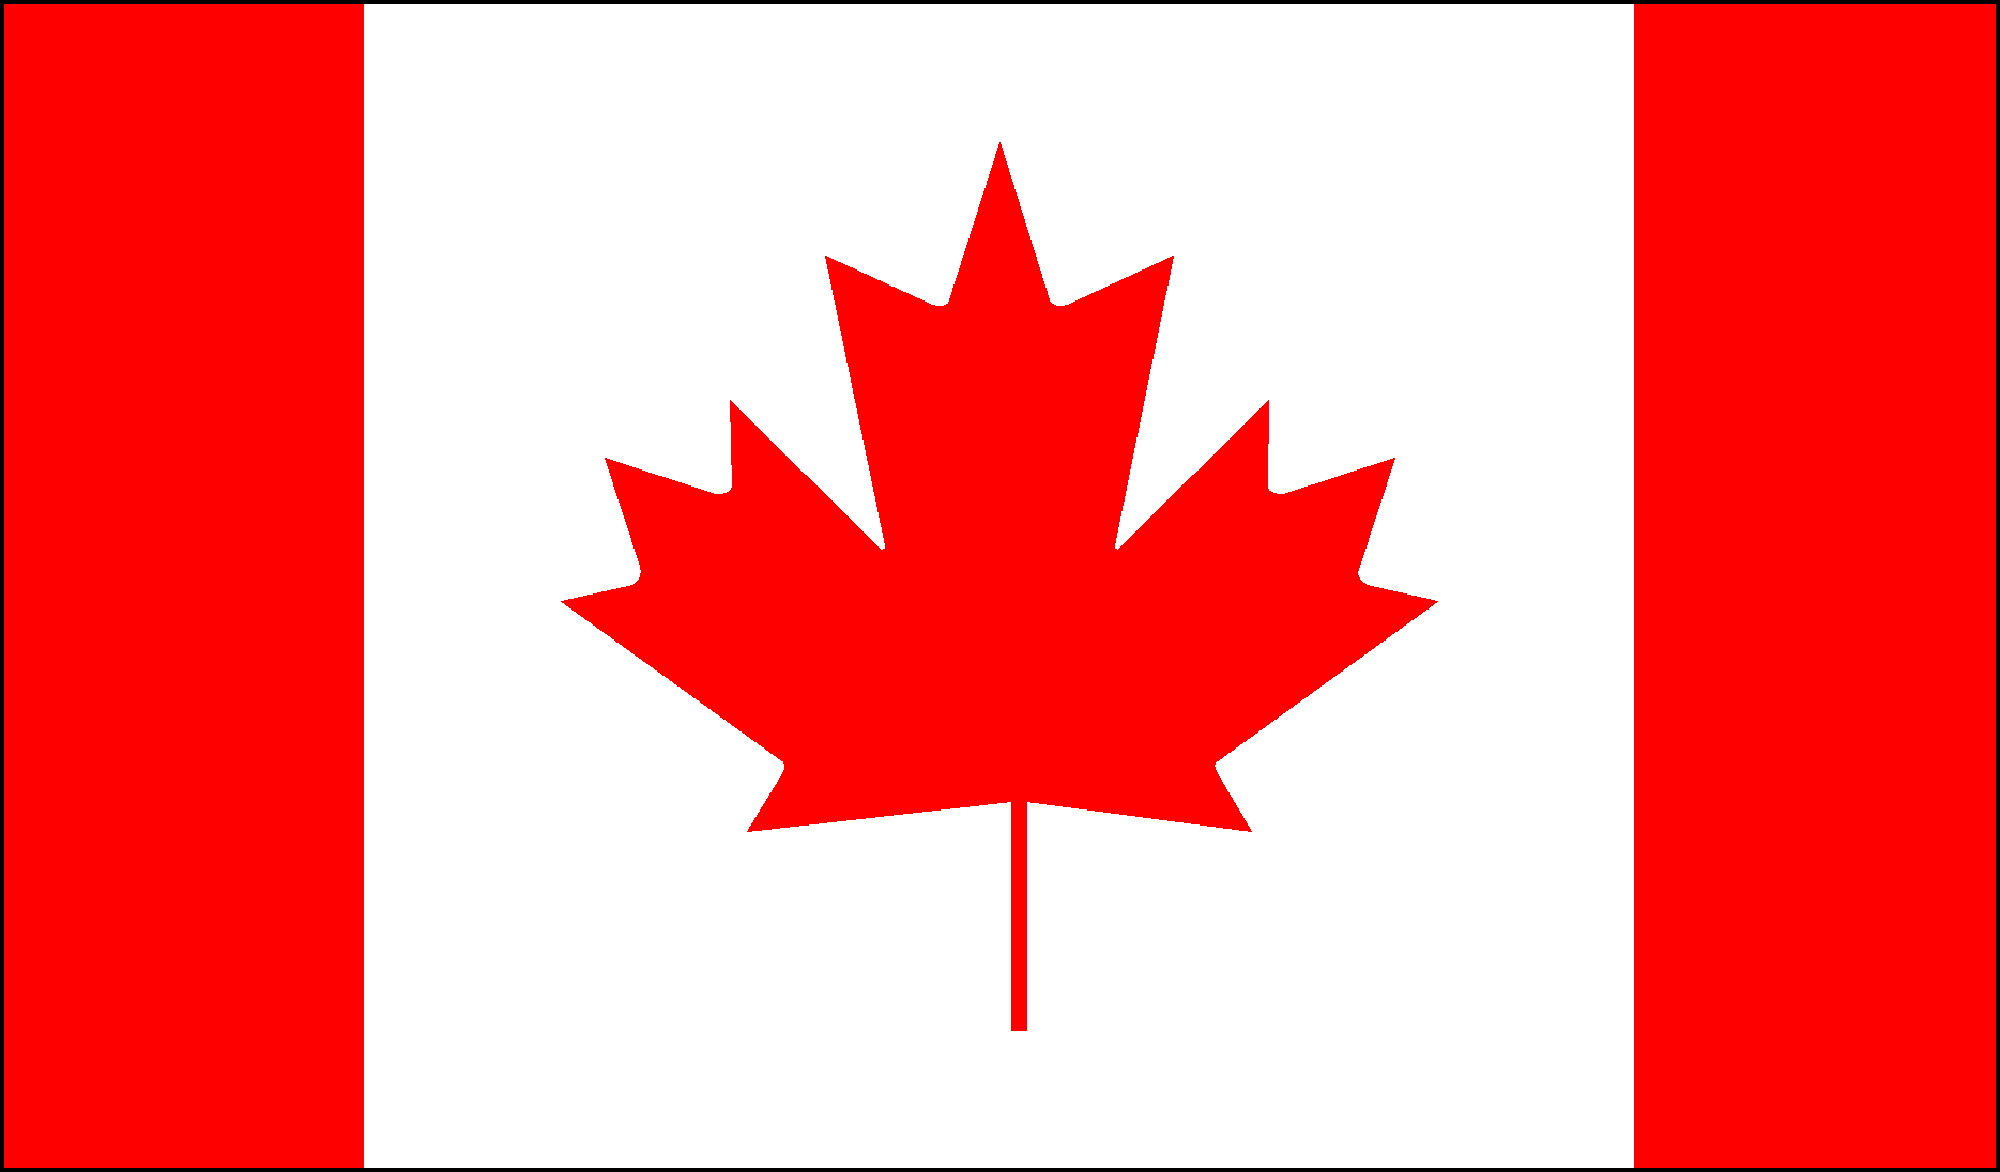 Canada: golden years